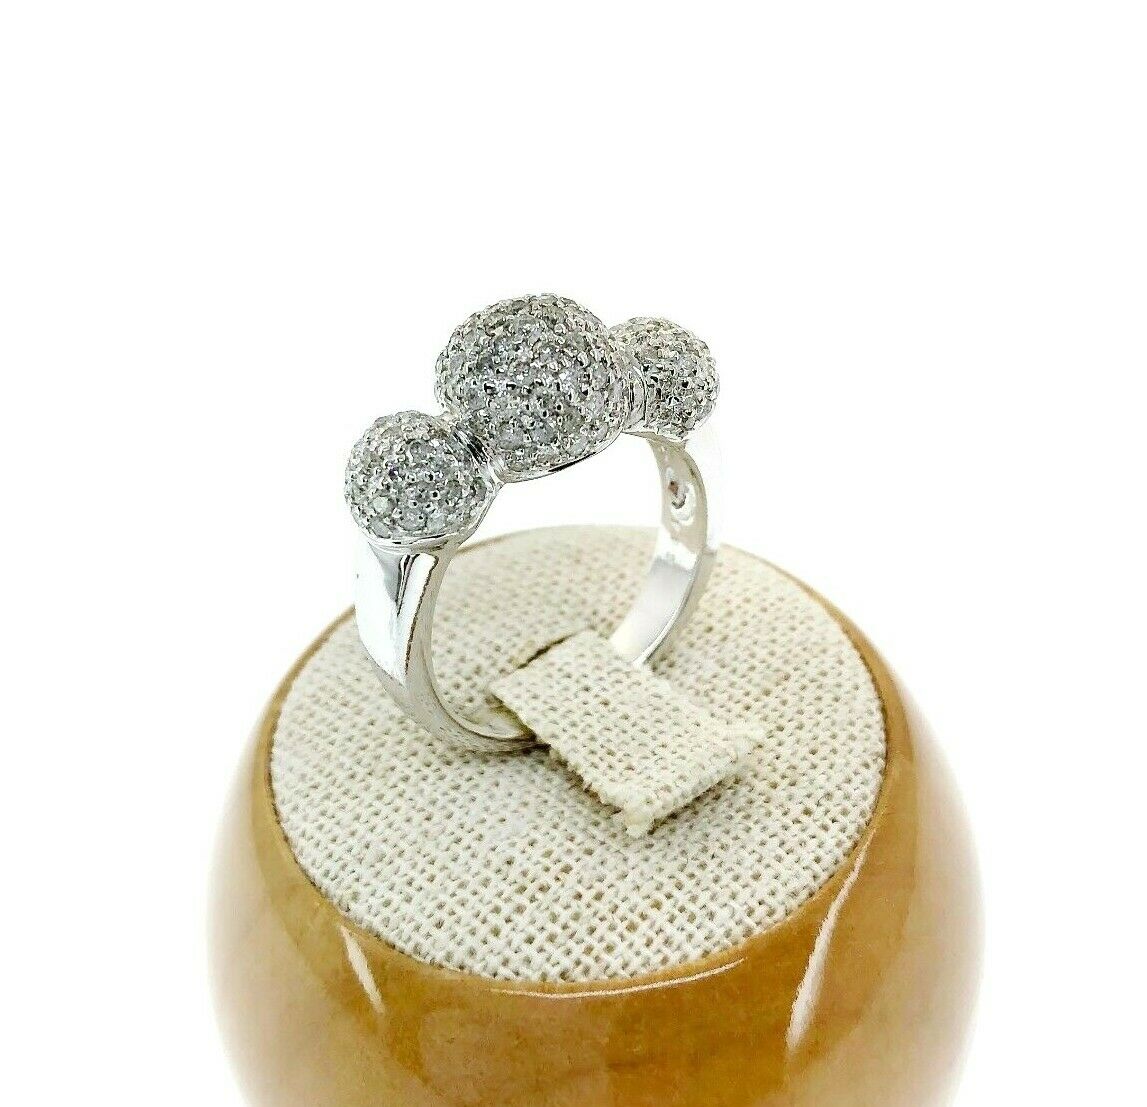 1.12 Carat t.w Puffed Ball Diamond Pave Wedding/Anniversary Ring 18K White Gold